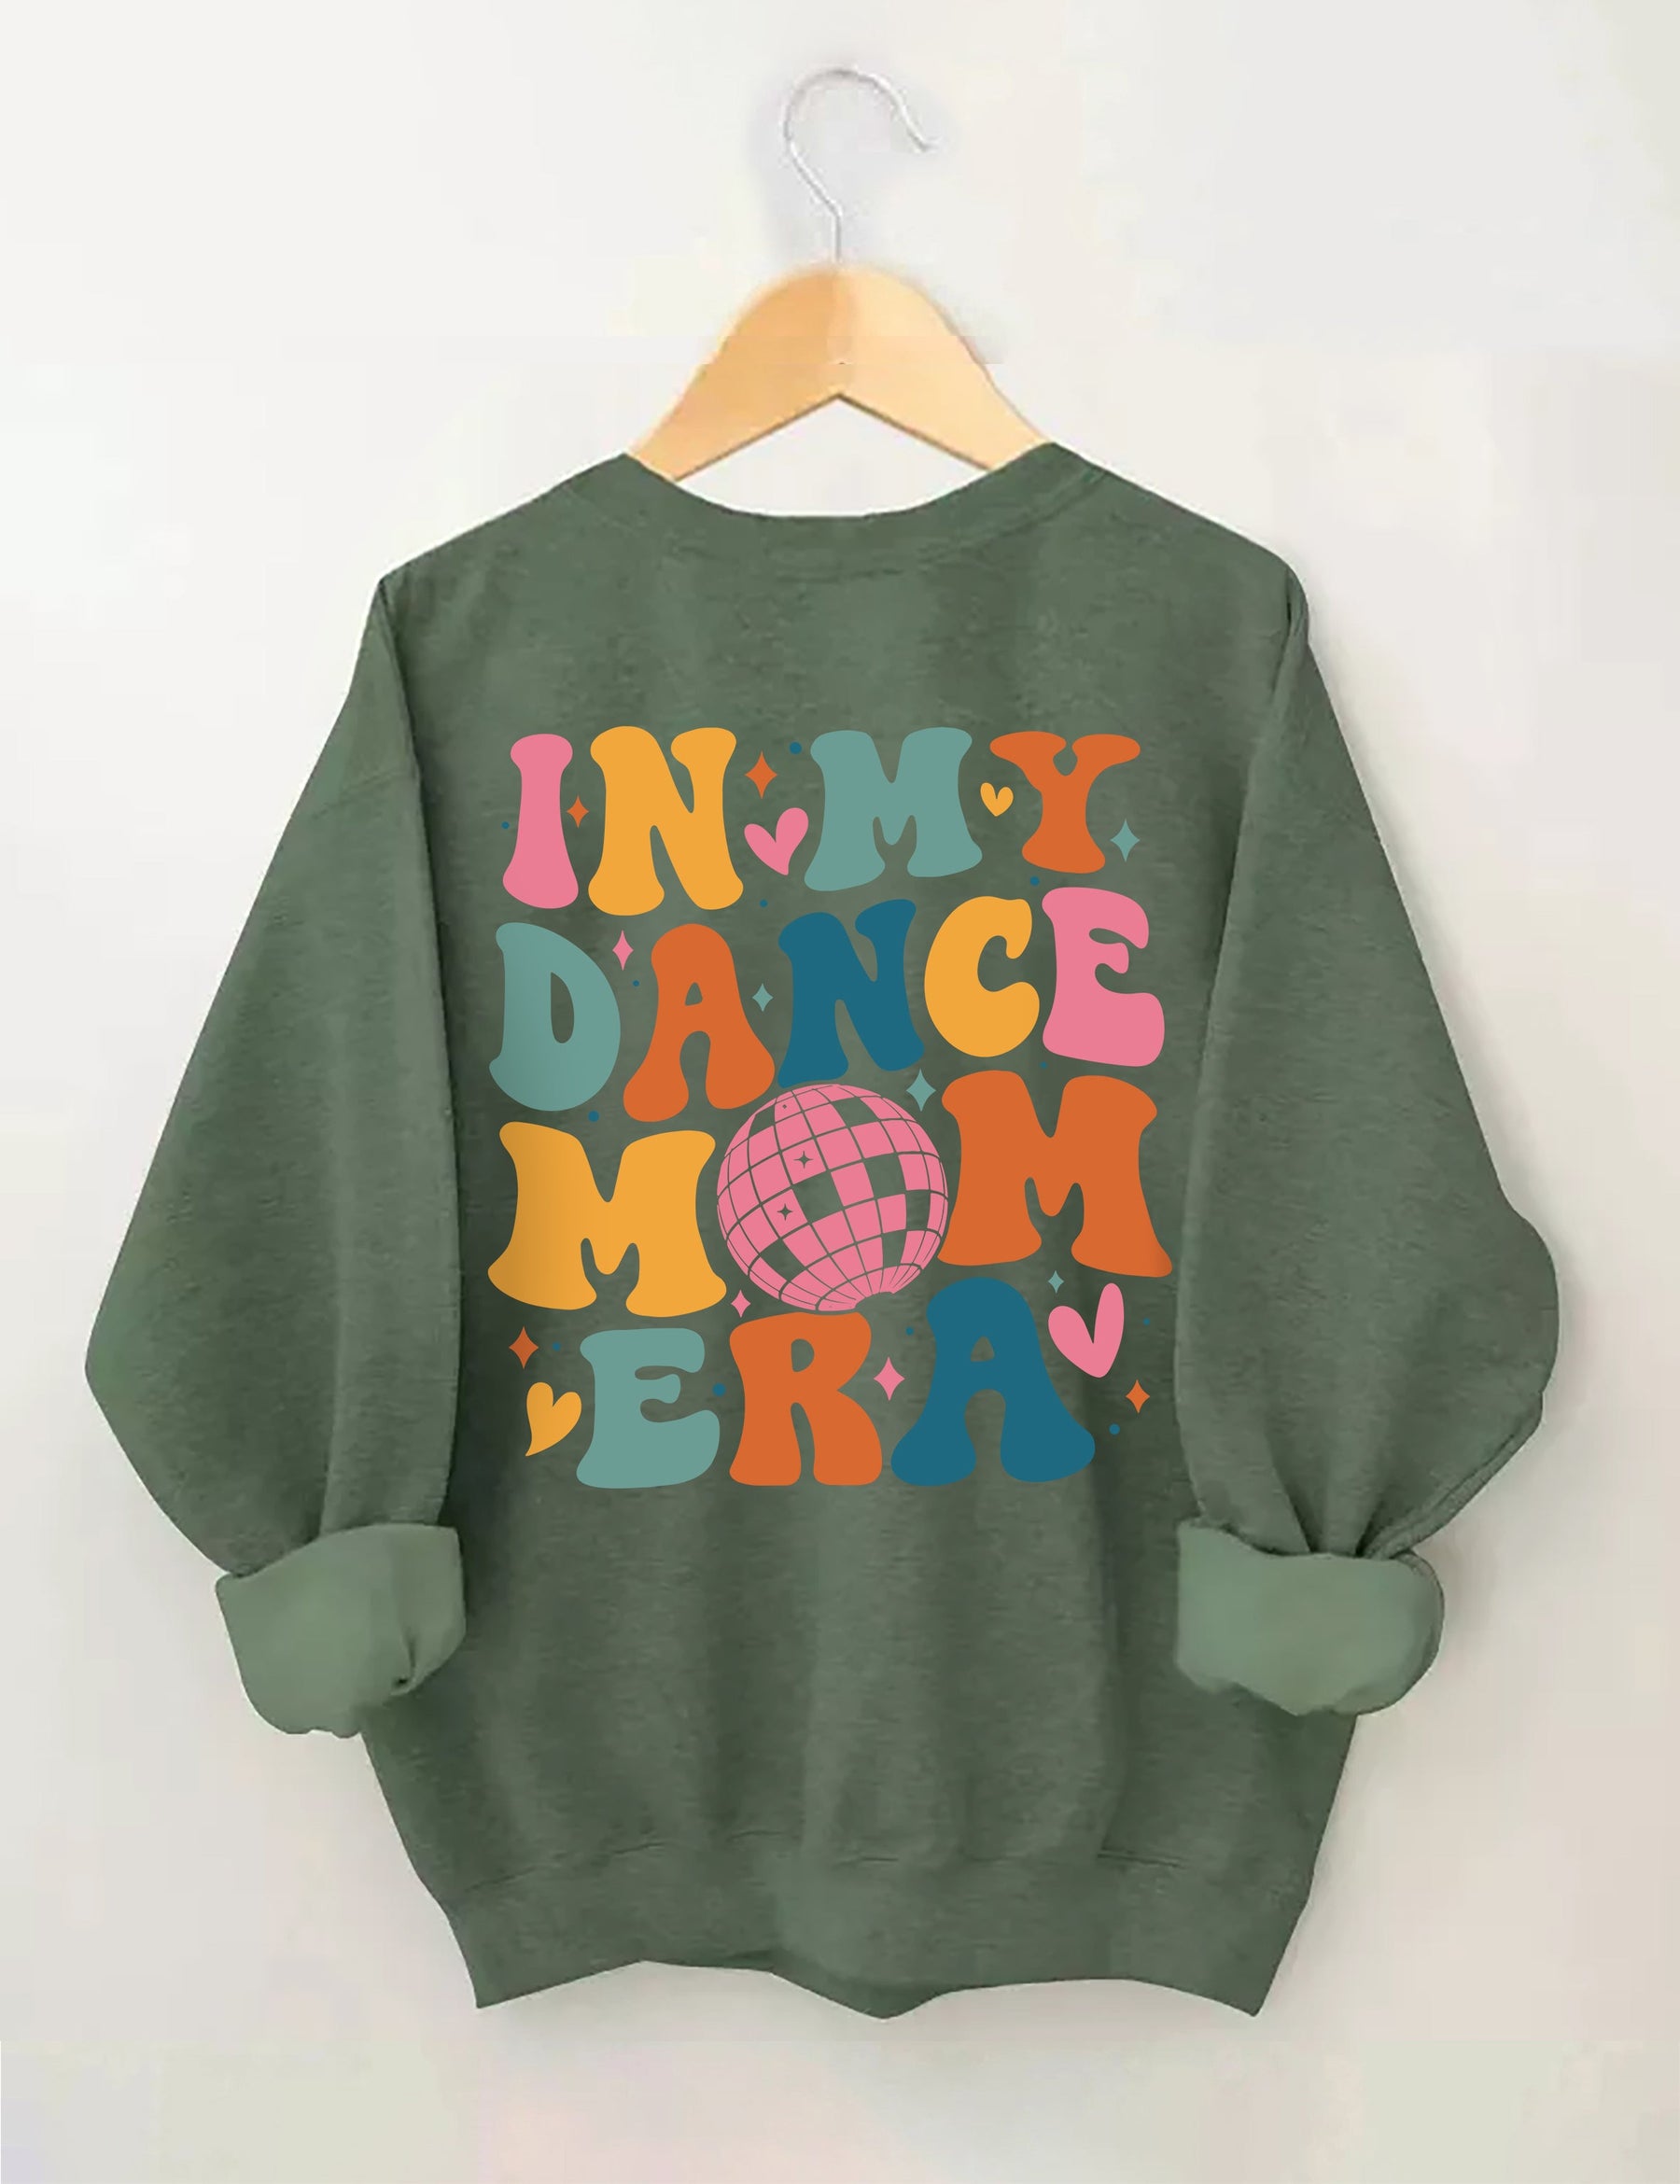 In My Dance Mom Era Sweatshirt